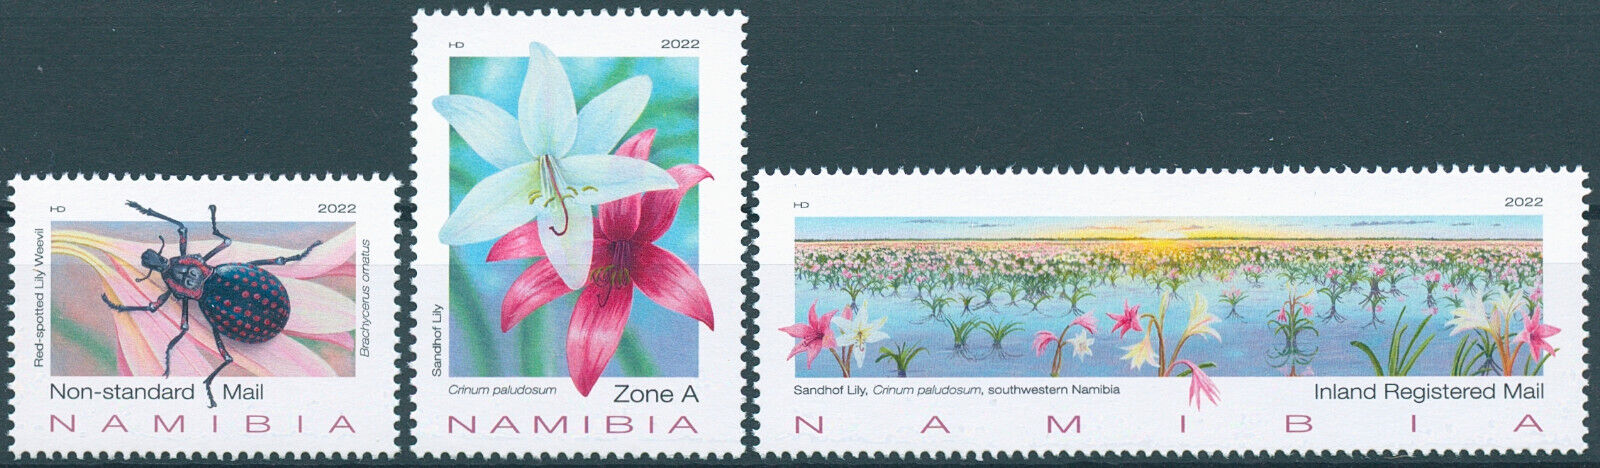 Namibia 2022 MNH Flowers Stamps Sandhof Lily Lilies Beetles Flora Nature 3v Set